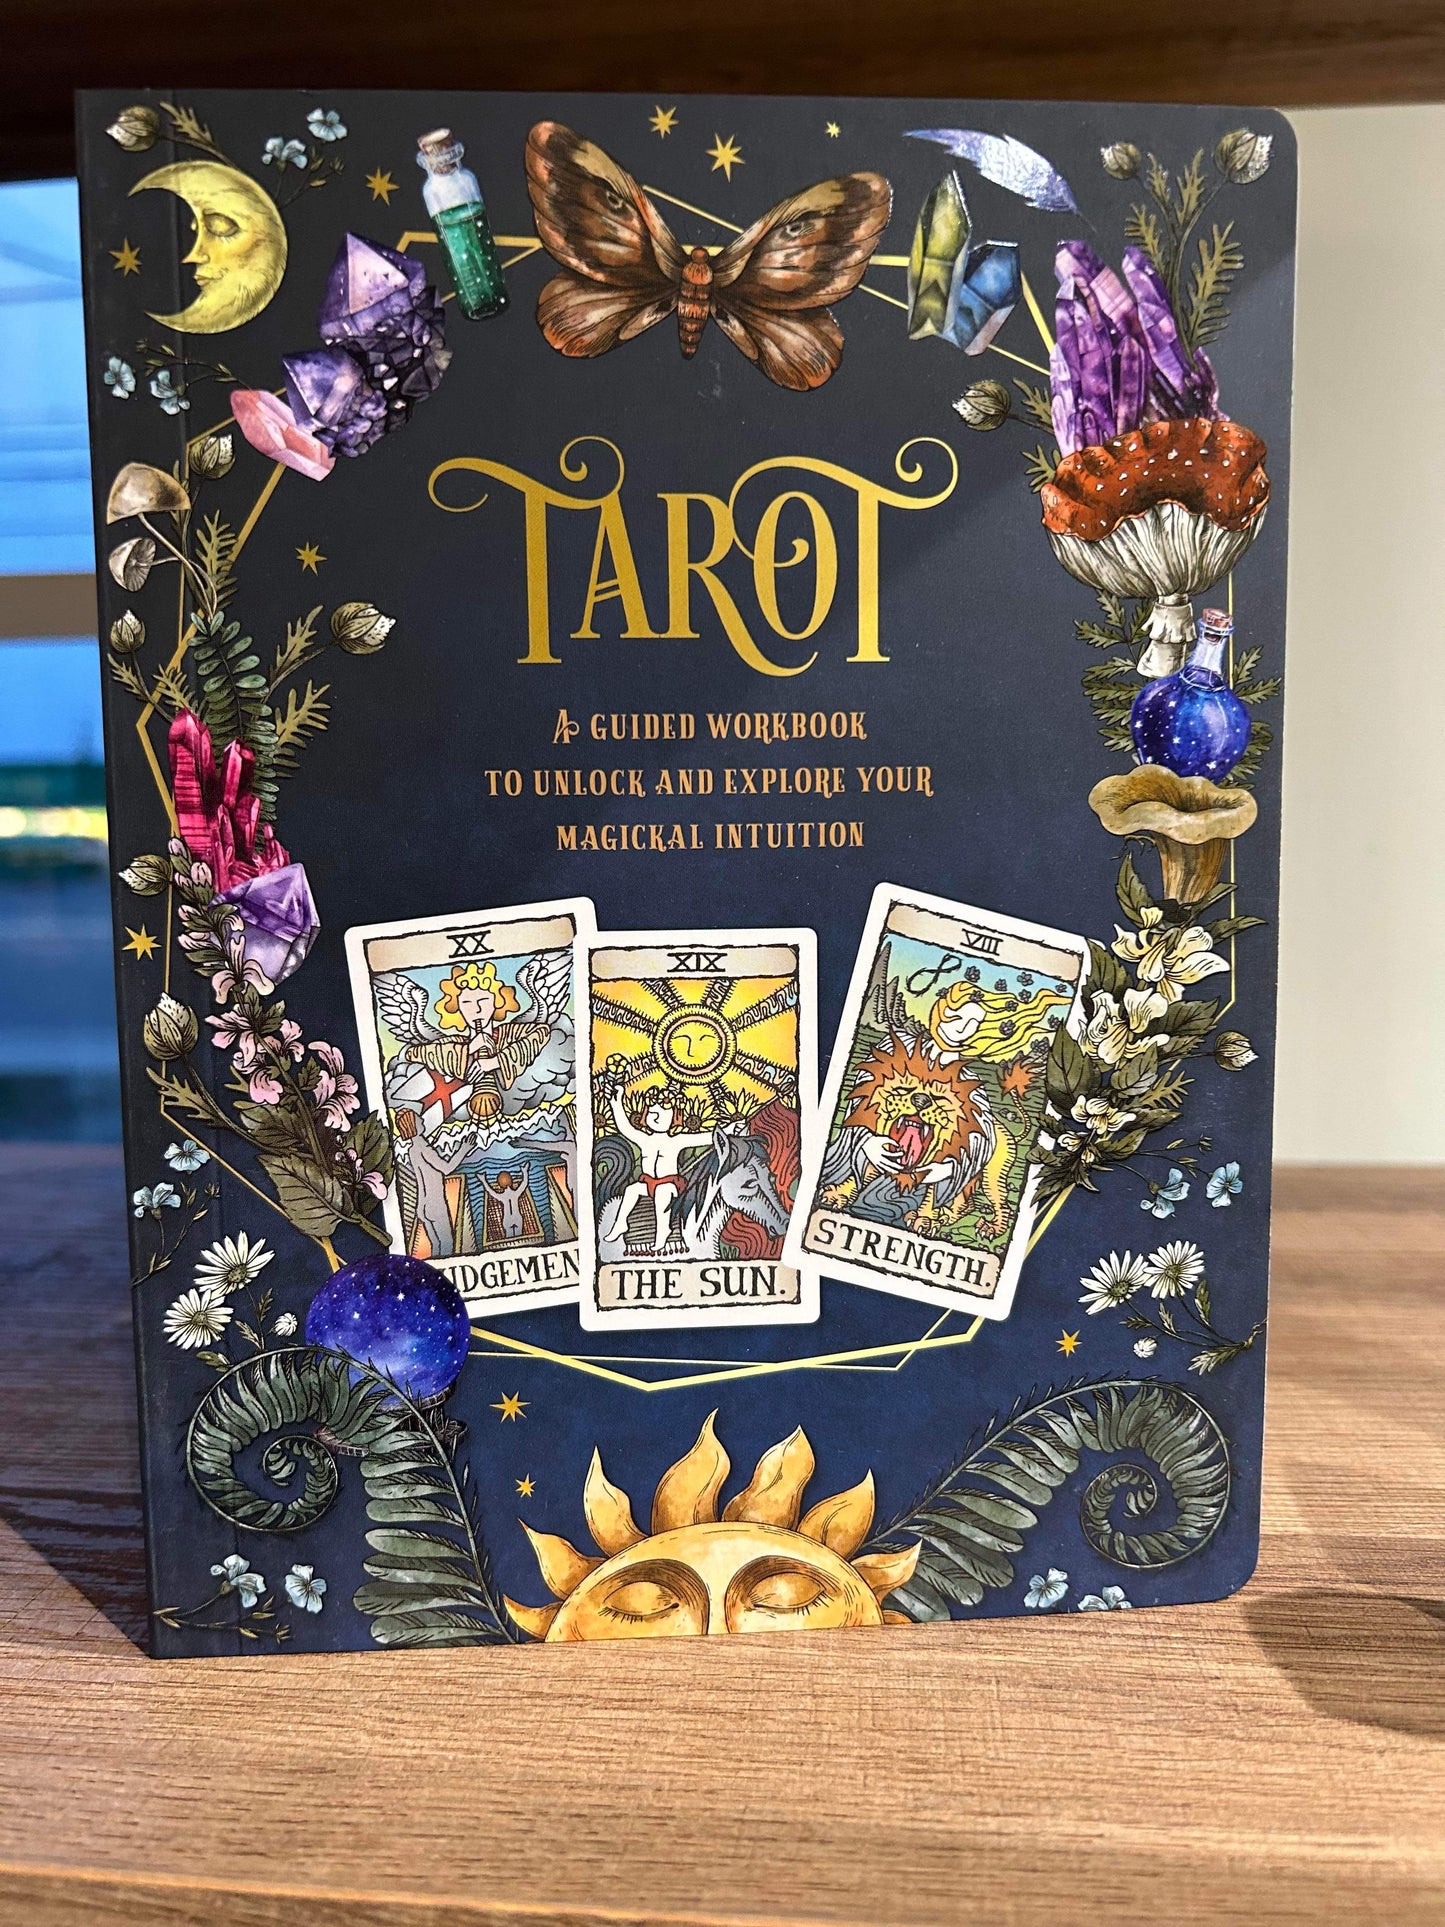 Tarot: A Guided Workbook by Phyllis Curott